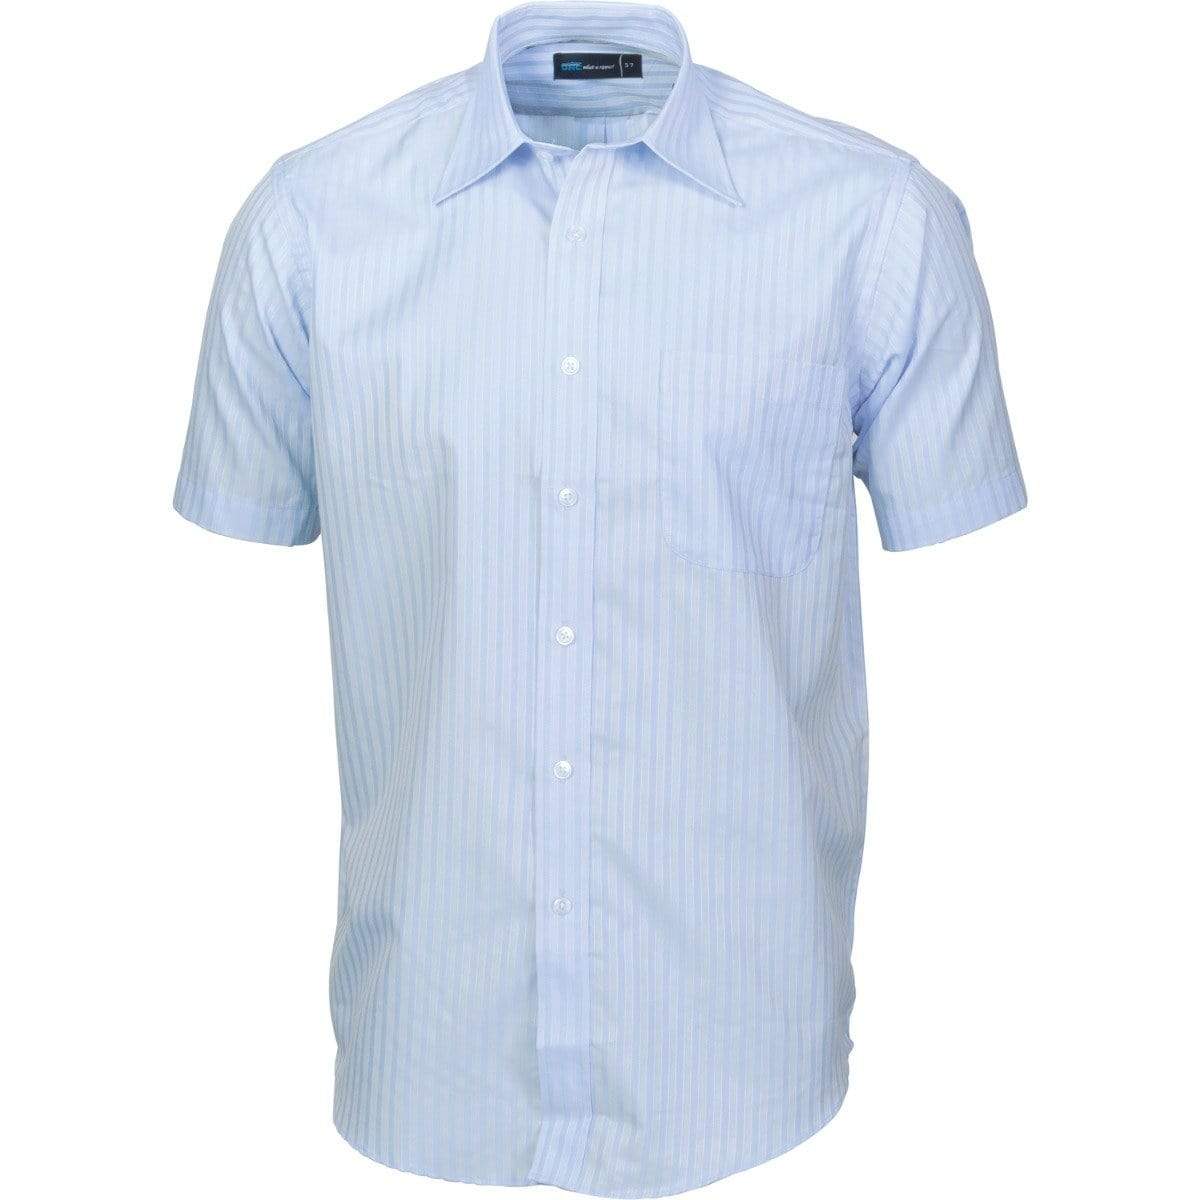 Dnc Workwear Men’s Tonal Stripe Short Sleeve Shirt - 4155 Corporate Wear DNC Workwear Light Blue 37 